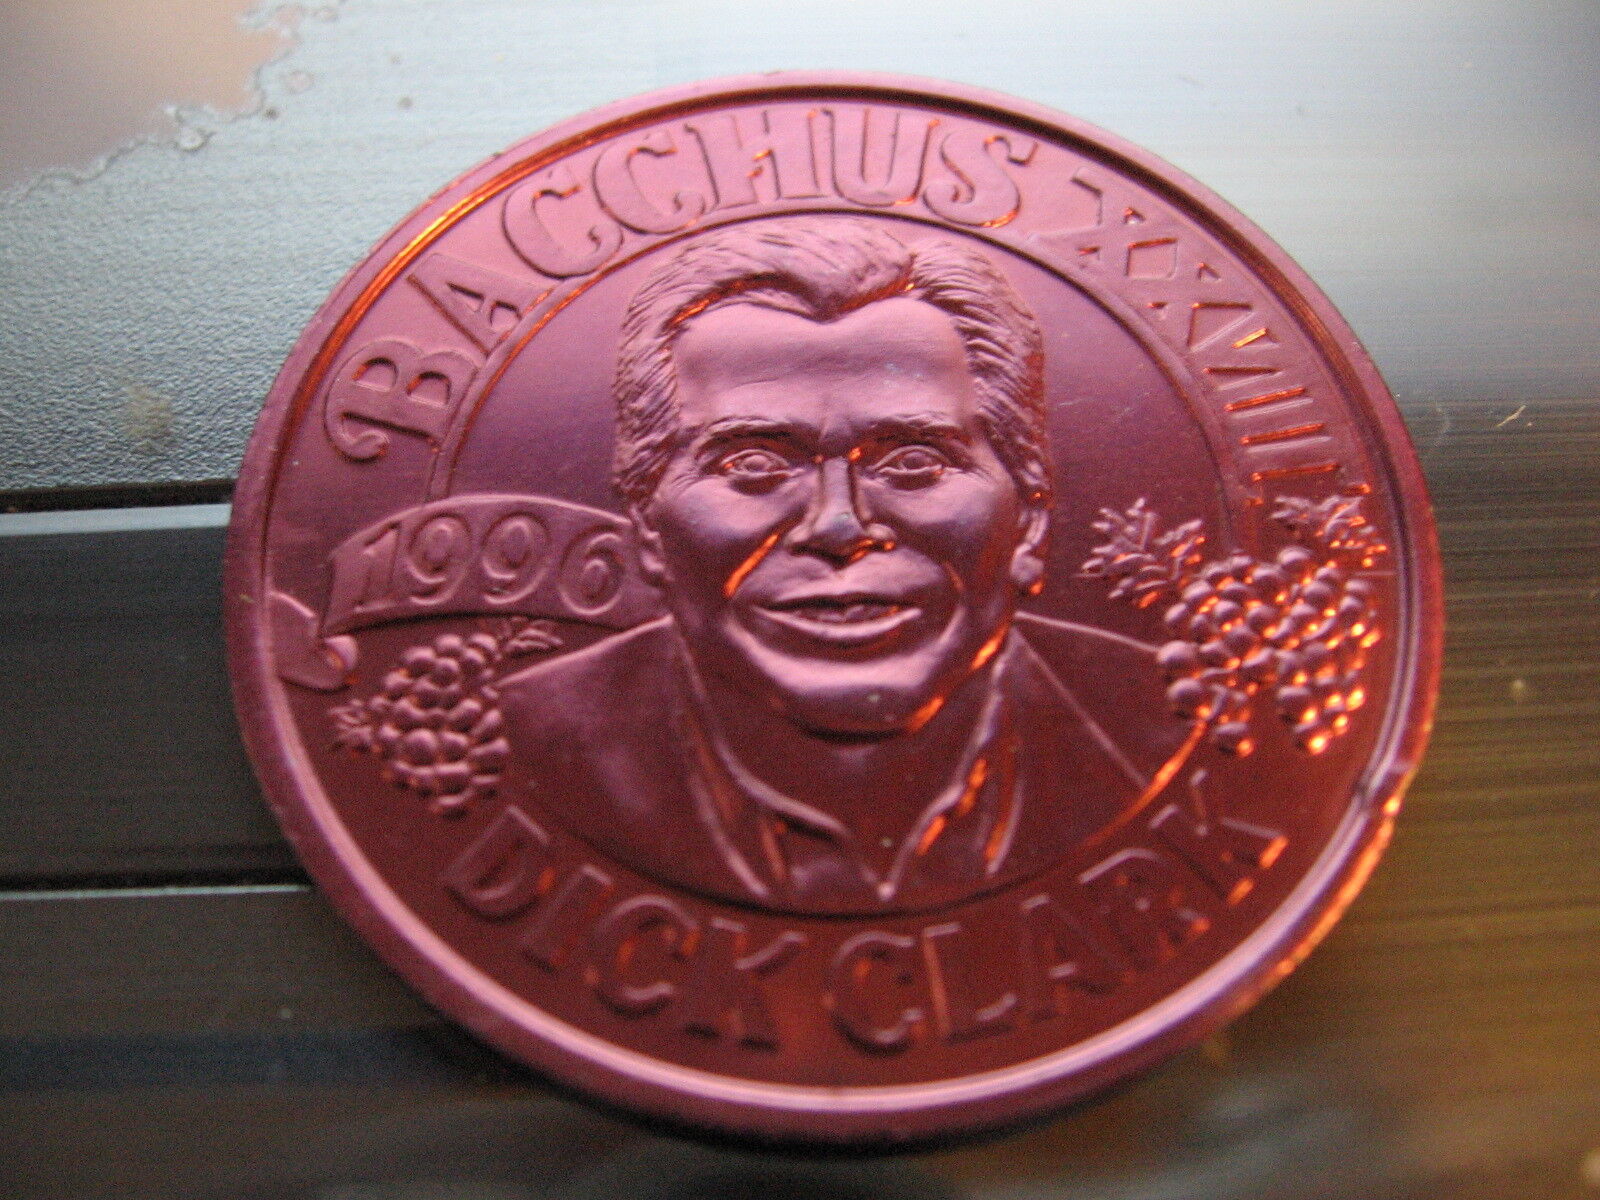 dick clark actor bacchus 1996 new orleans mardi gras doubloon alum coin